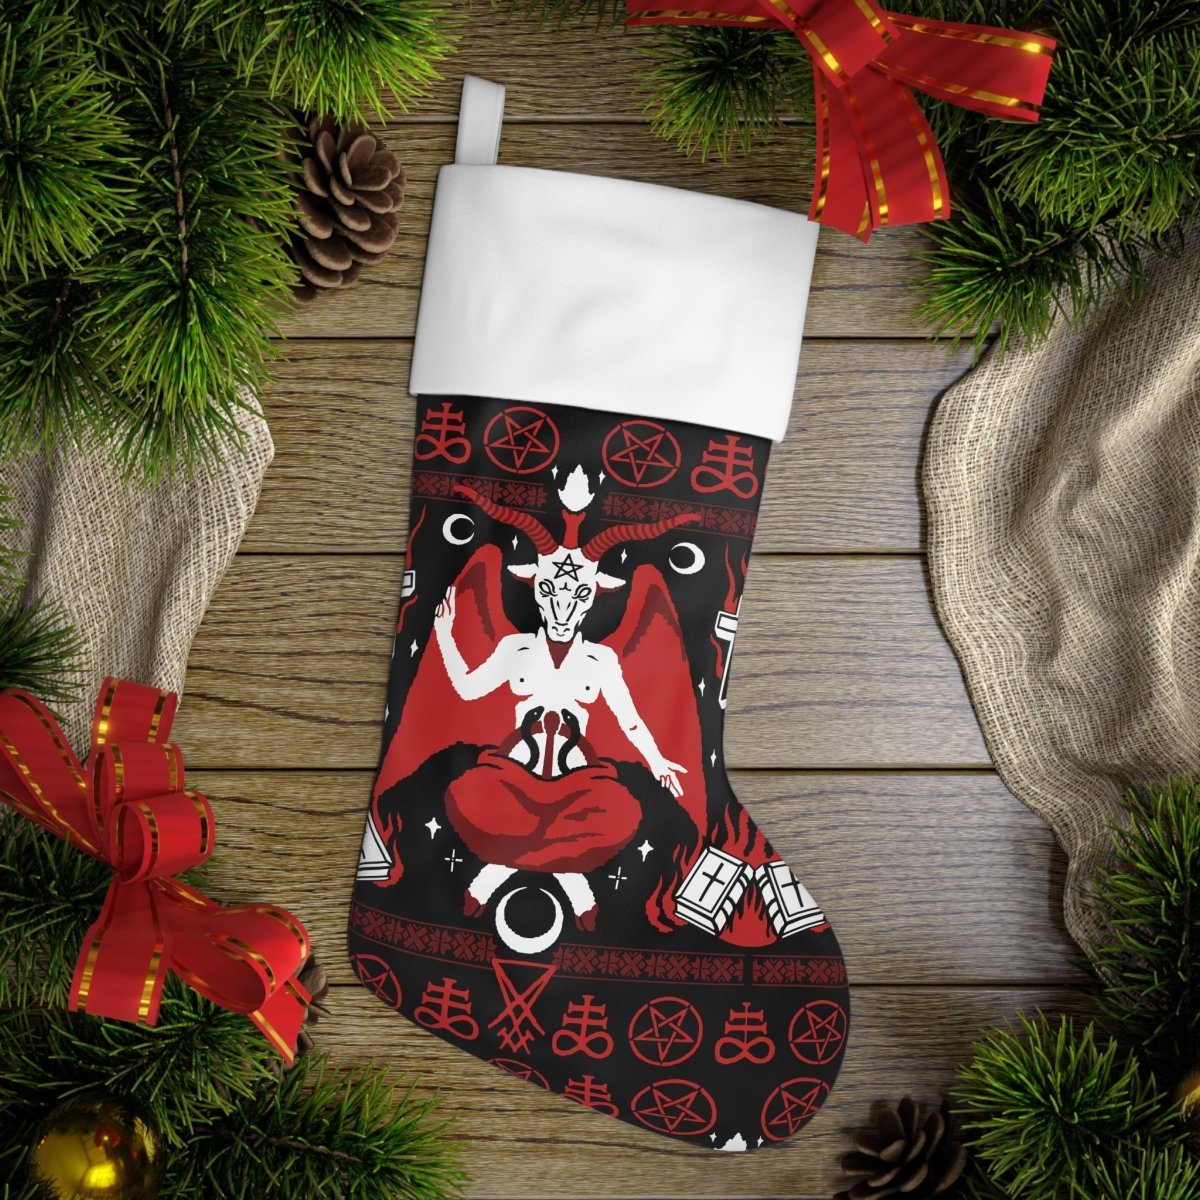 Too Fast | Baphoclaus Satanic Holiday Christmas Stocking